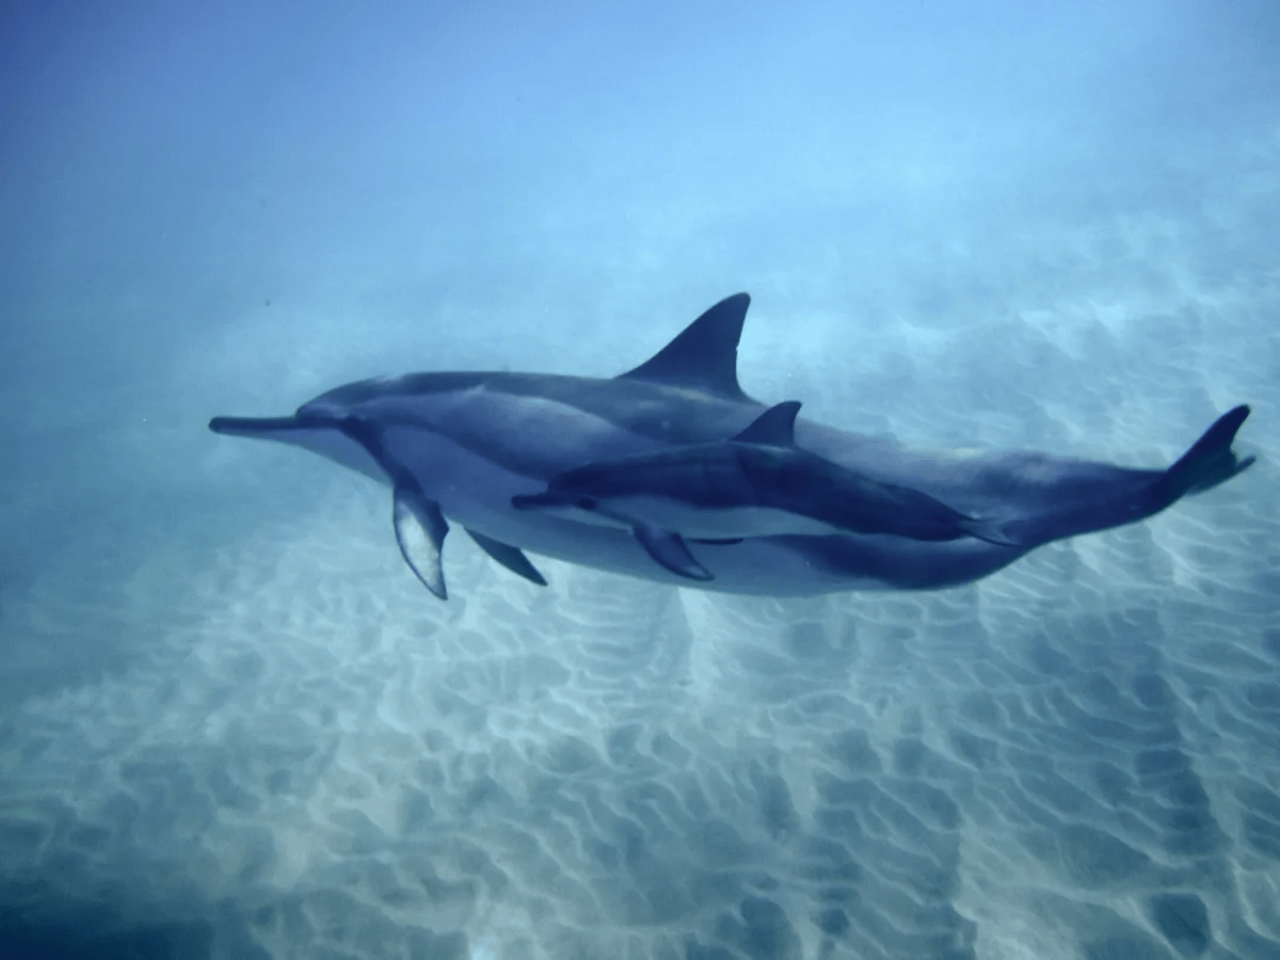 dolphin